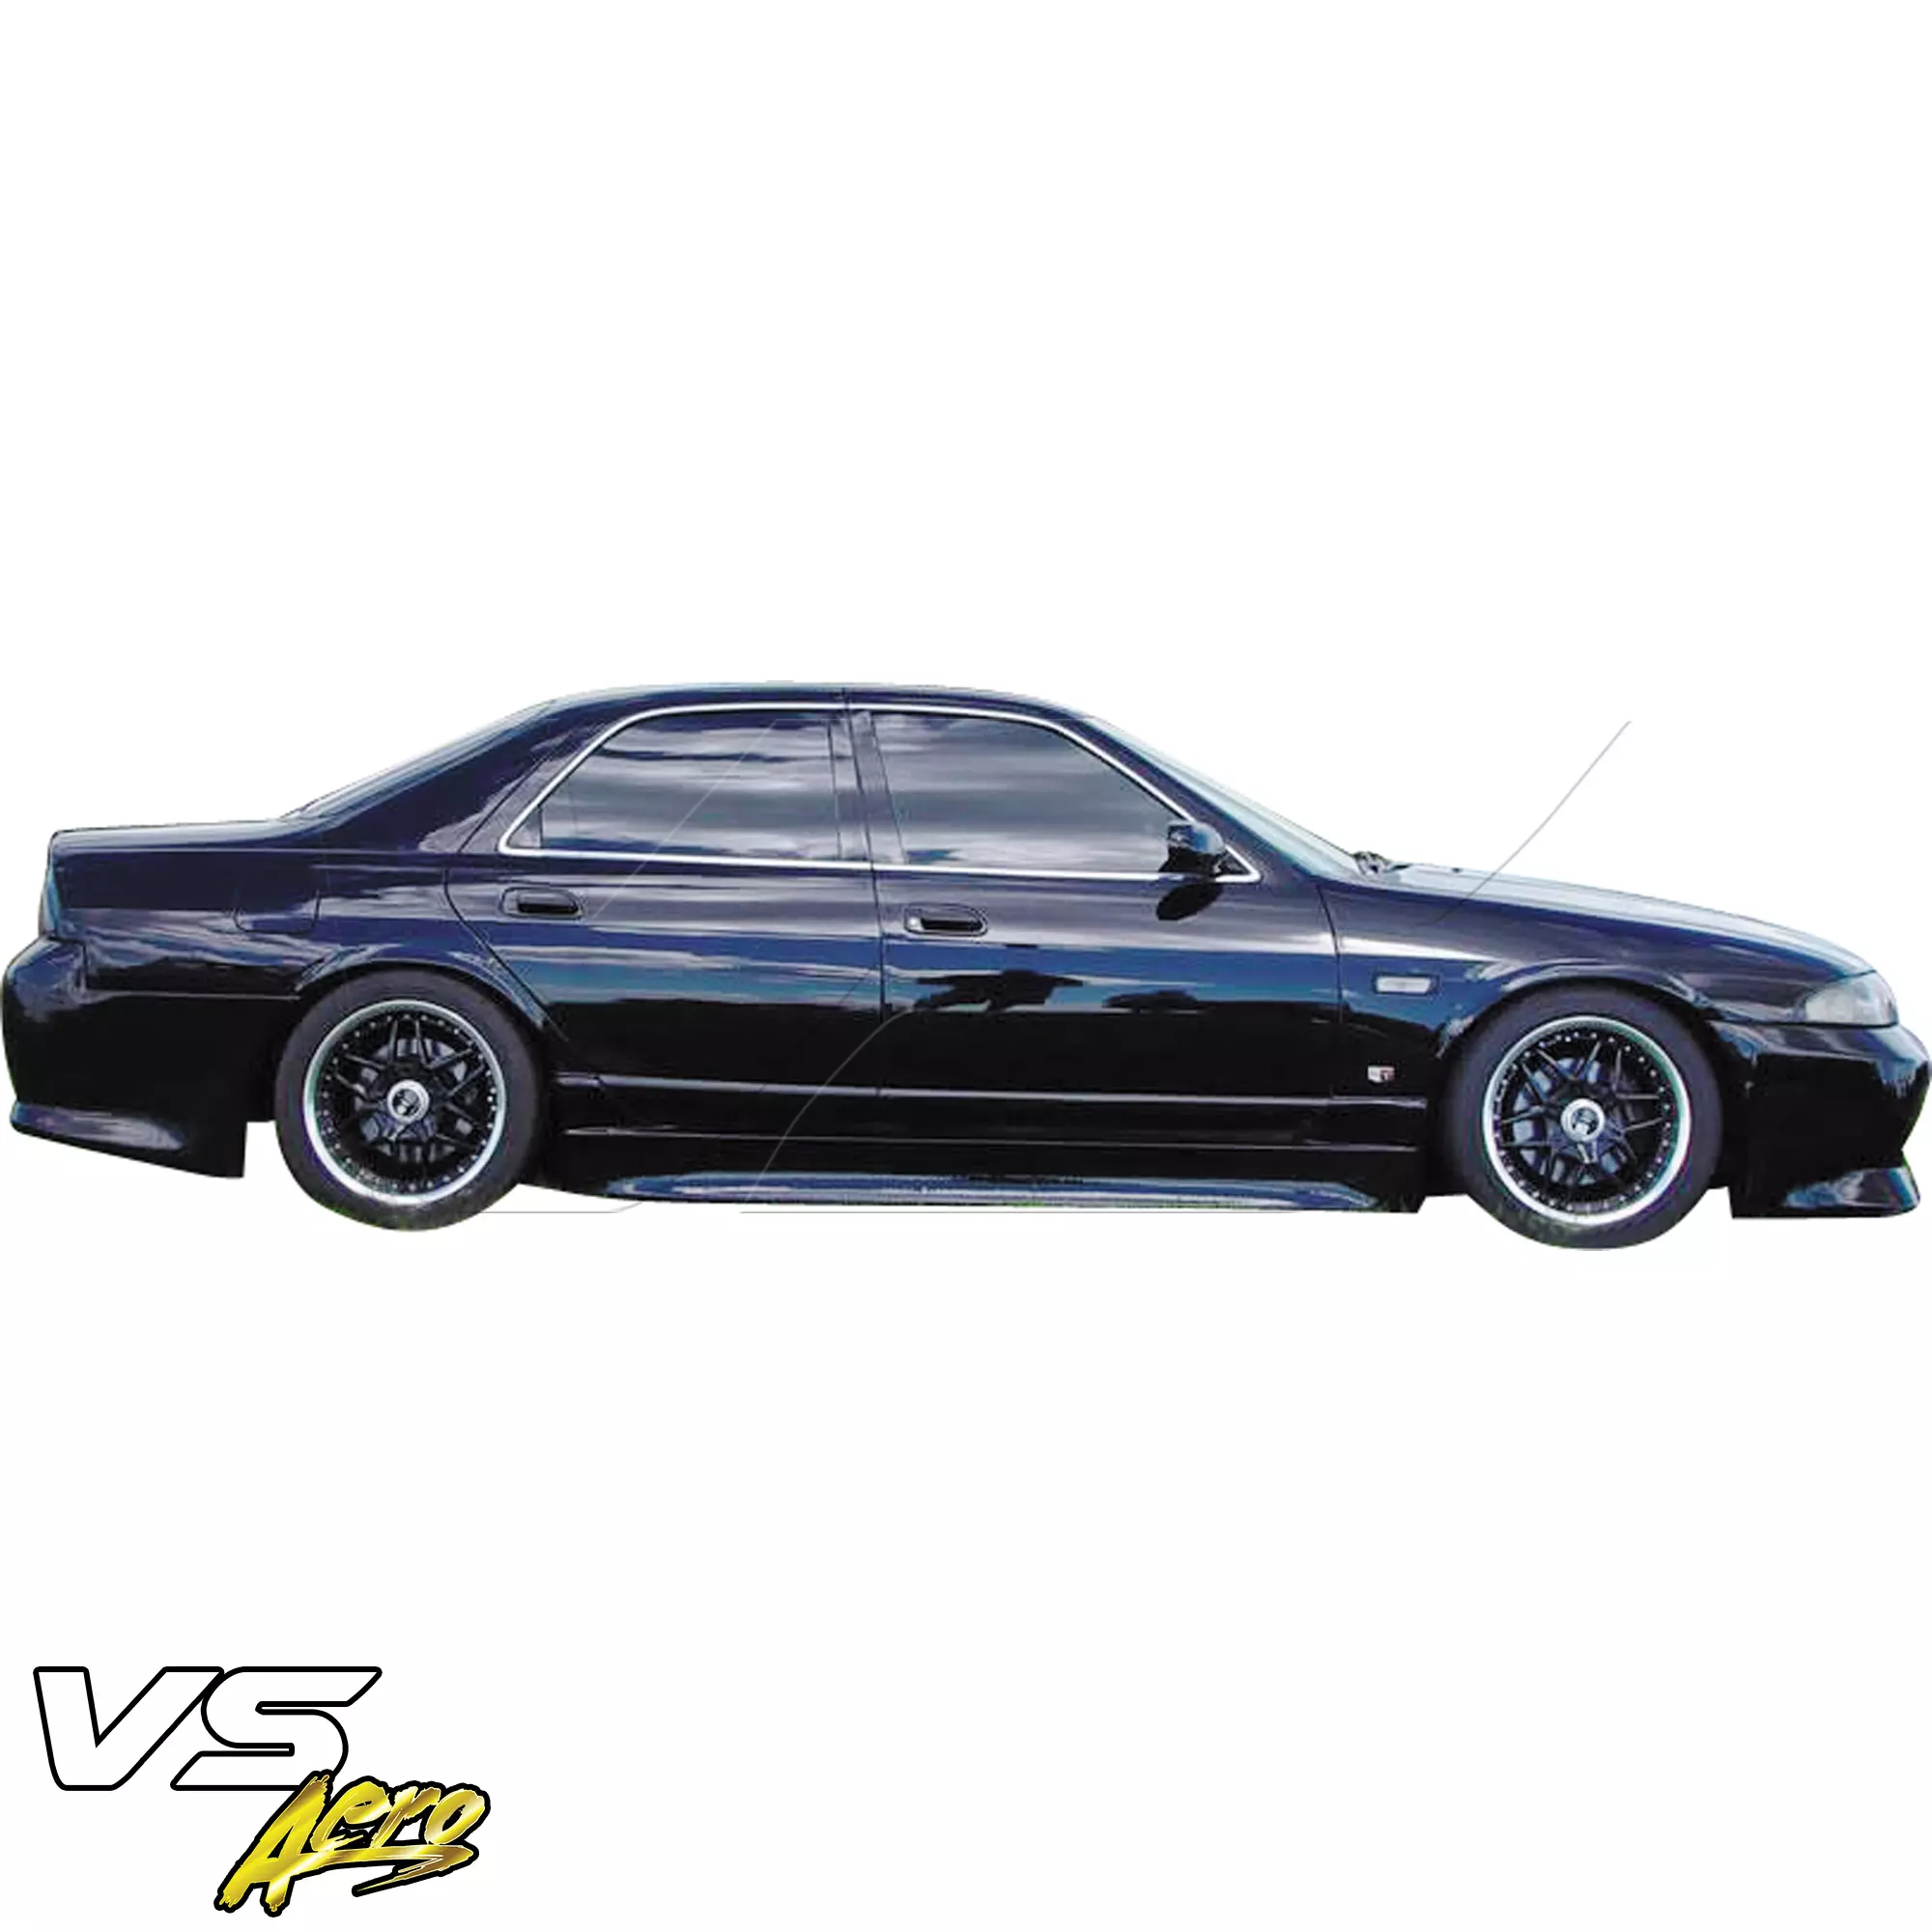 VSaero FRP FKON Side Skirts > Nissan Skyline R33 GTS 1995-1998 > 4dr Sedan - Image 15